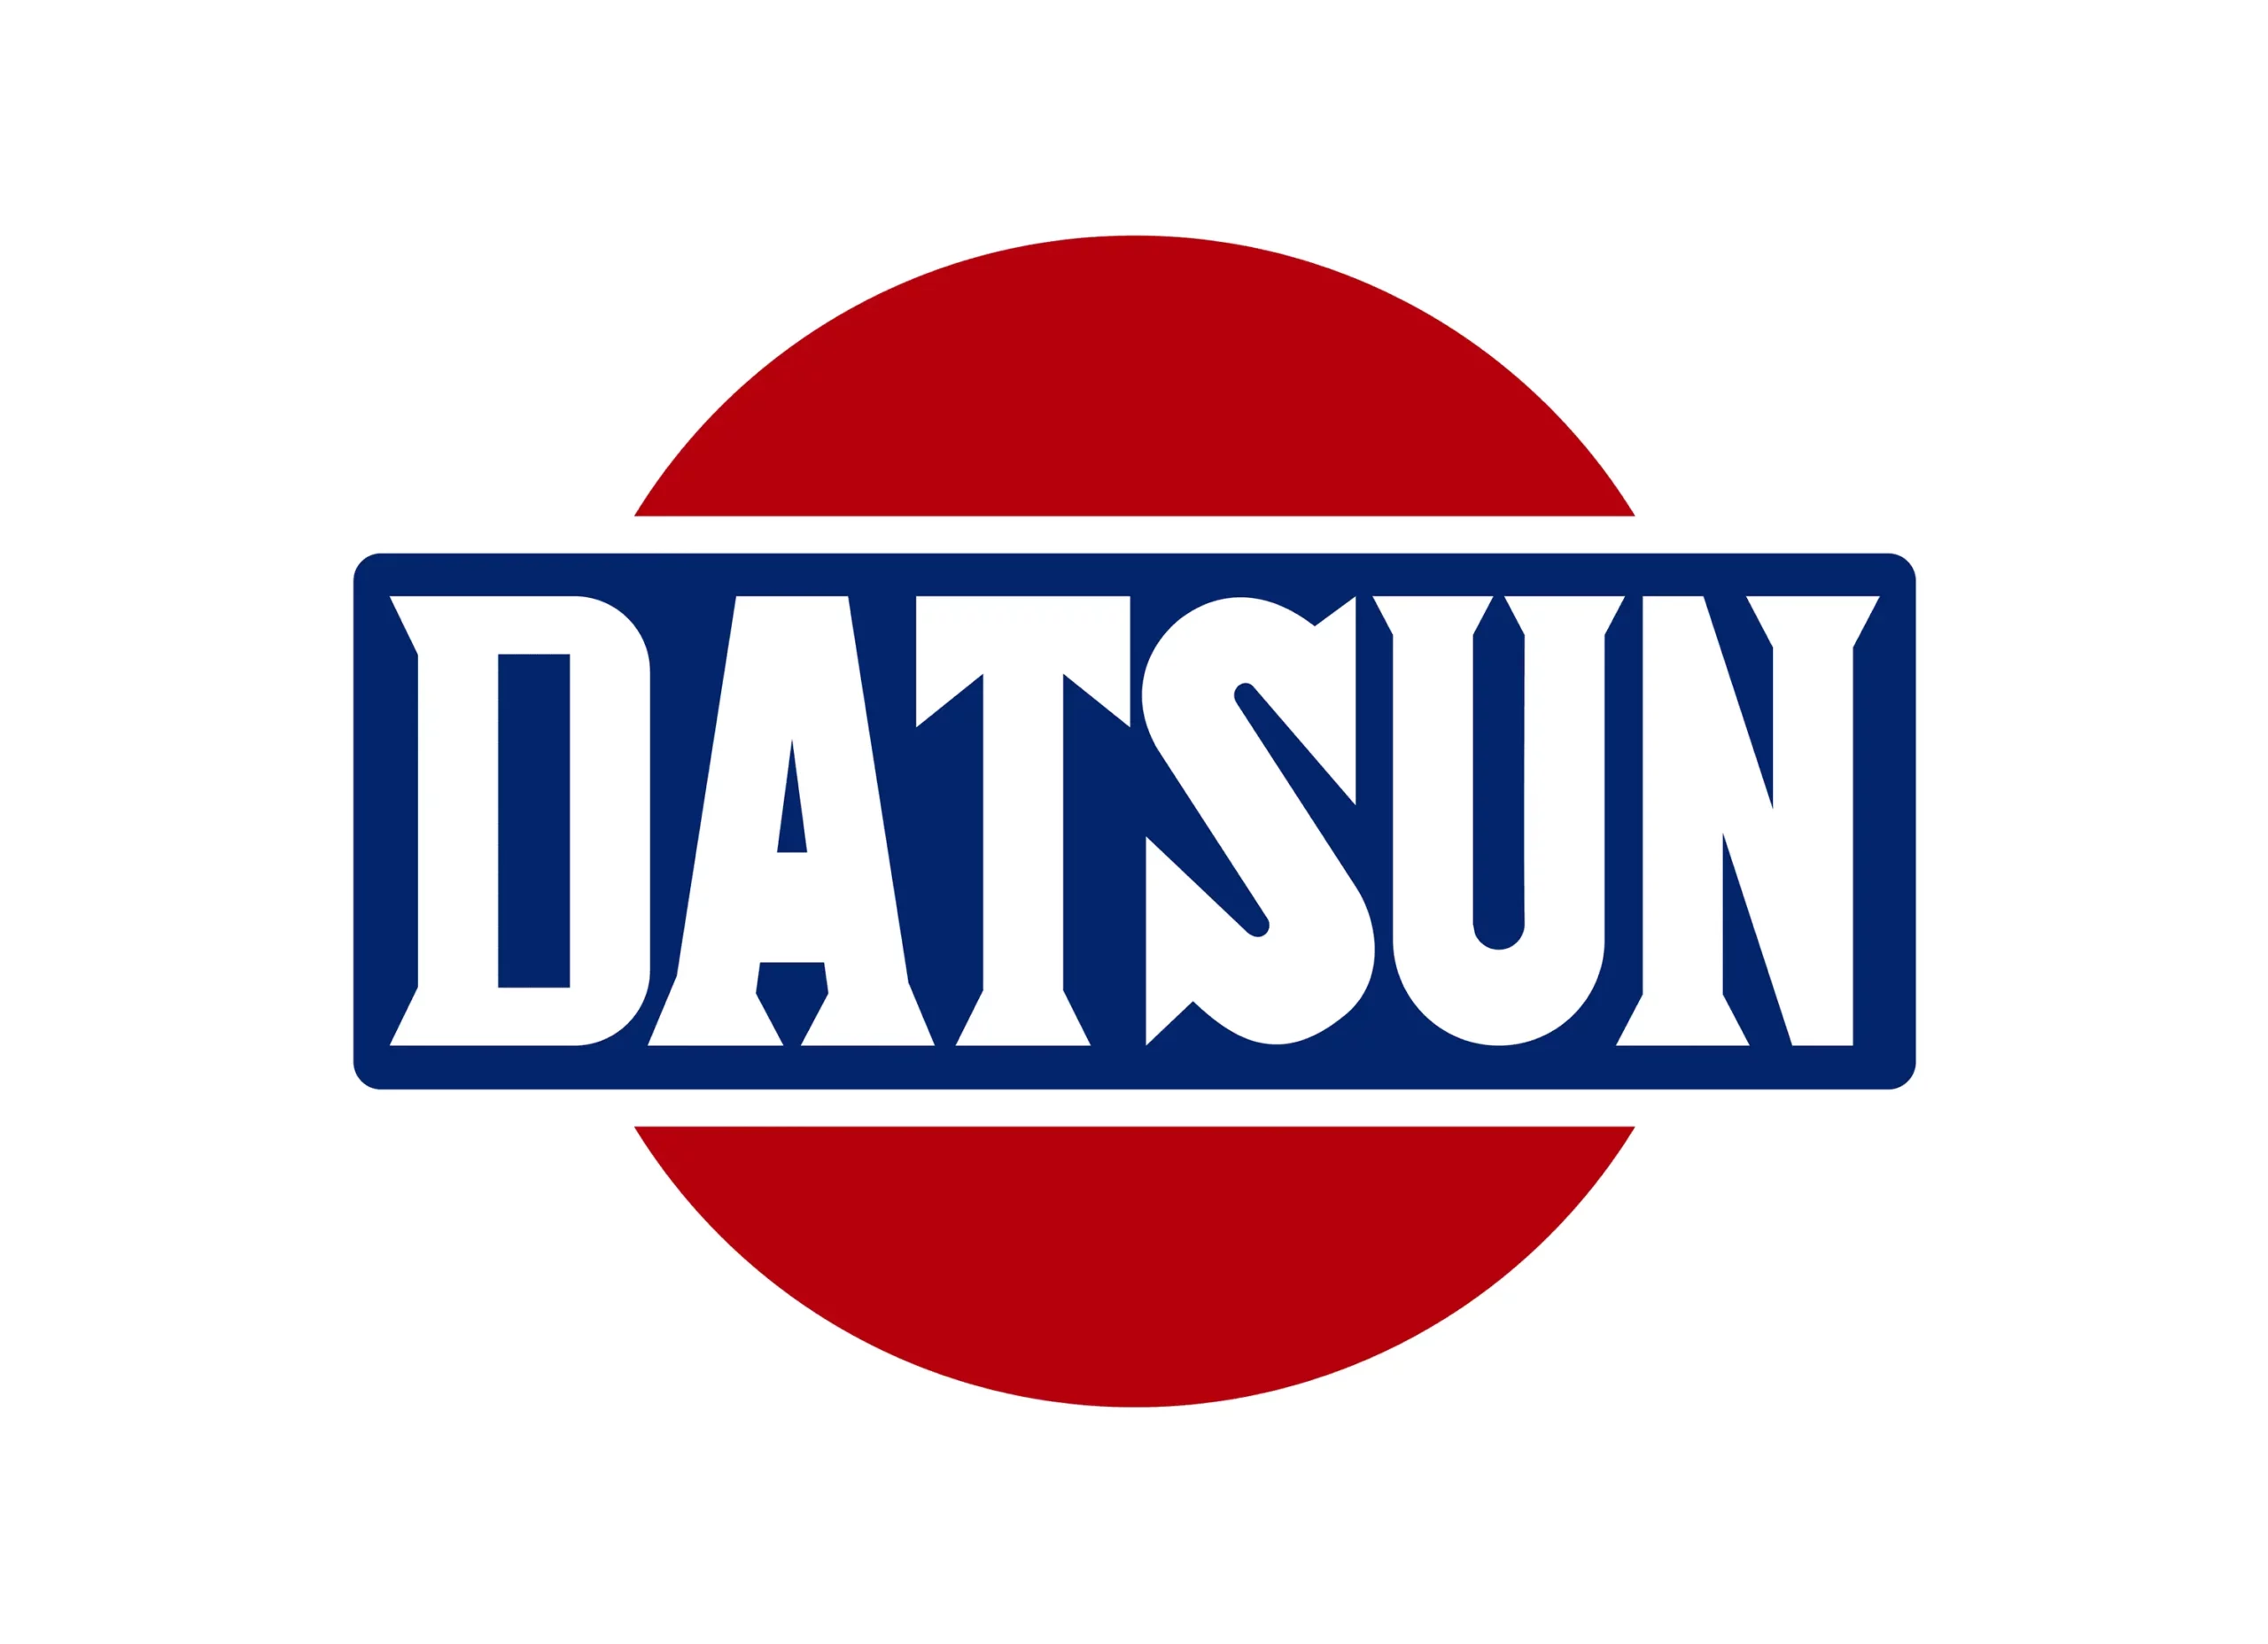 Datsun logo 1931-1935